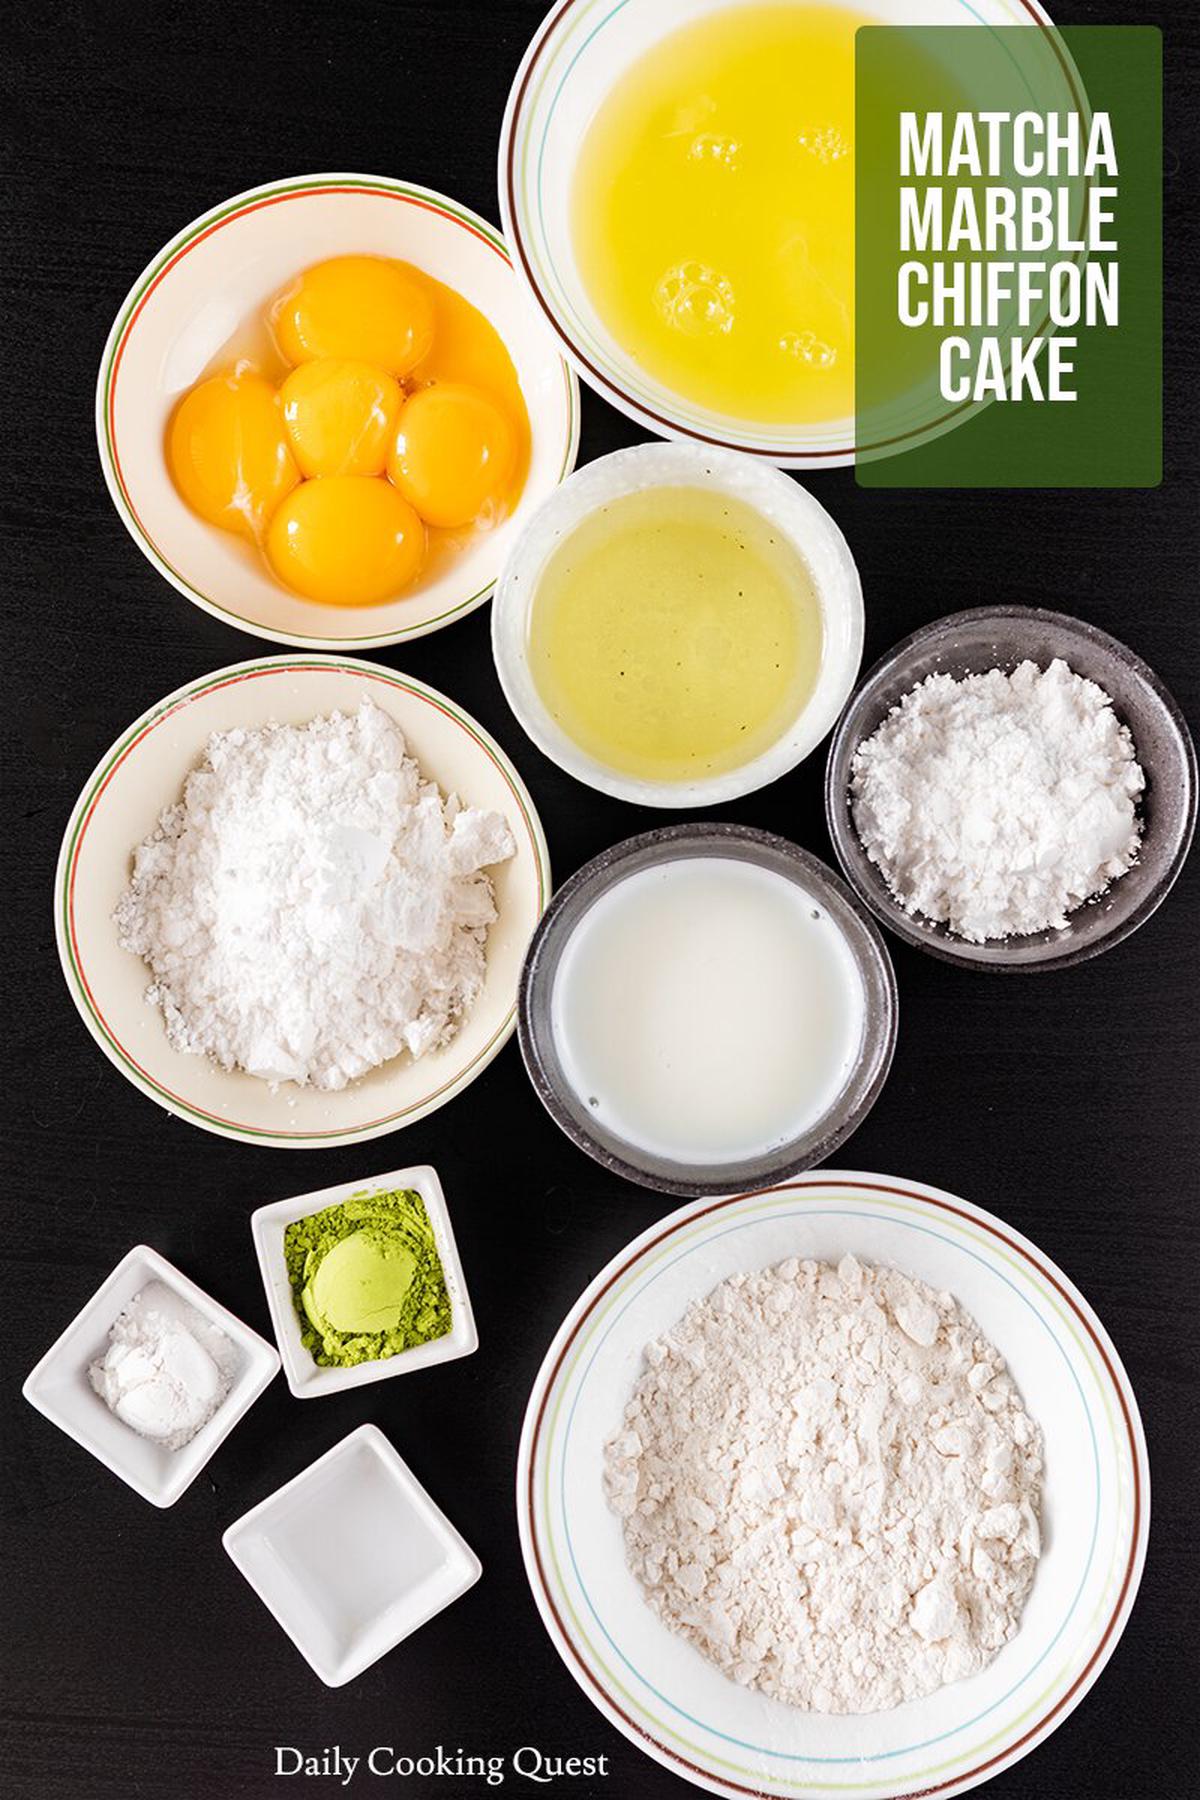 What you need to bake a matcha marble chiffon cake.